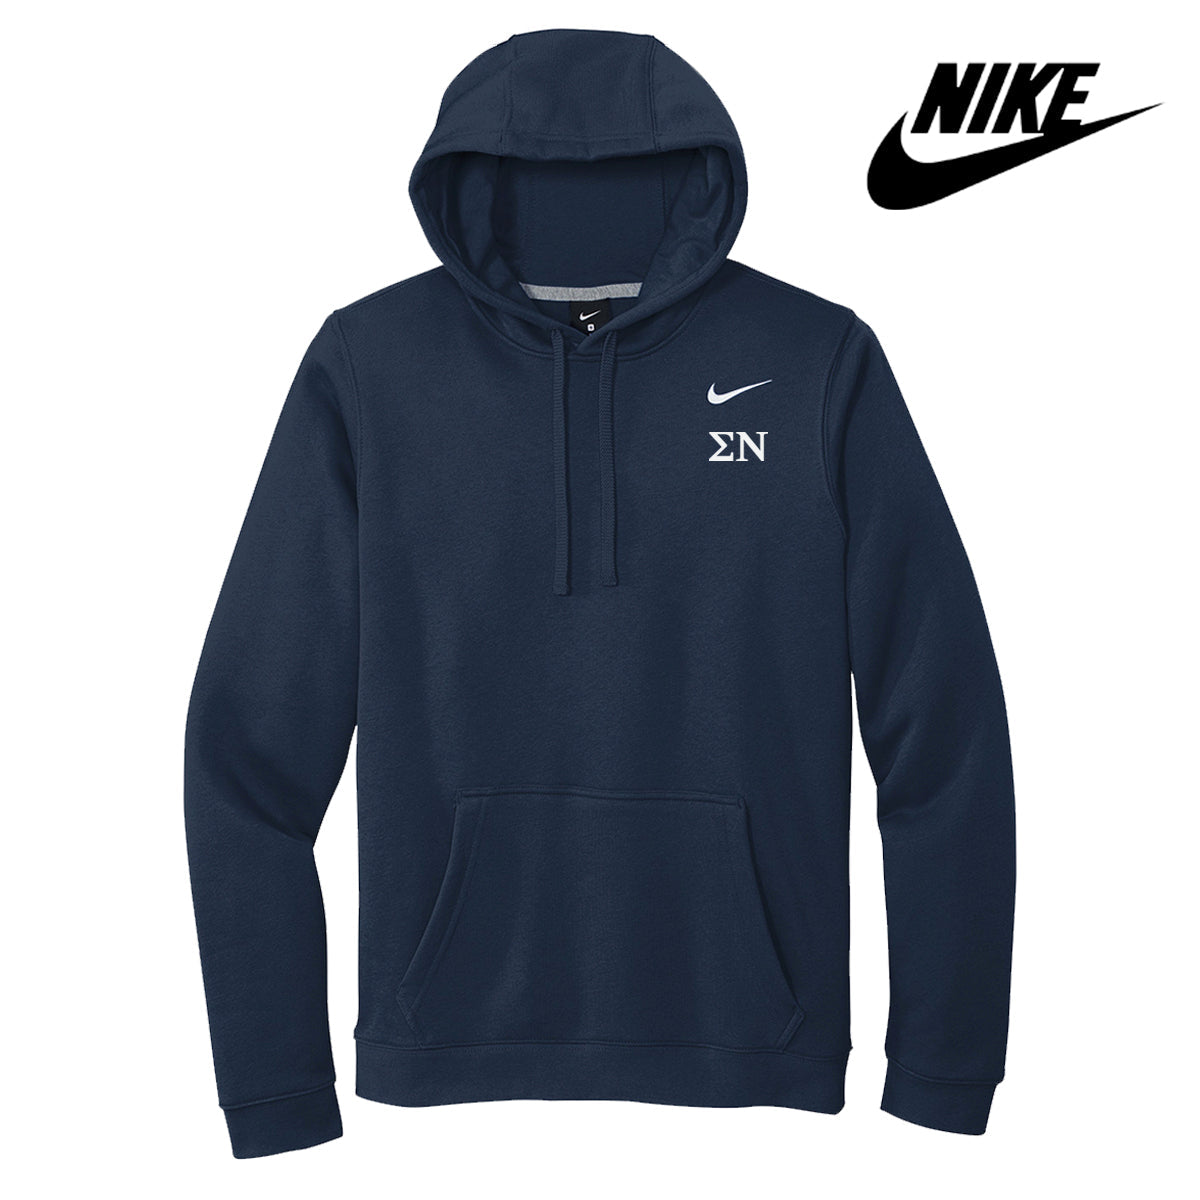 Sigma Nu Nike Embroidered Hoodie